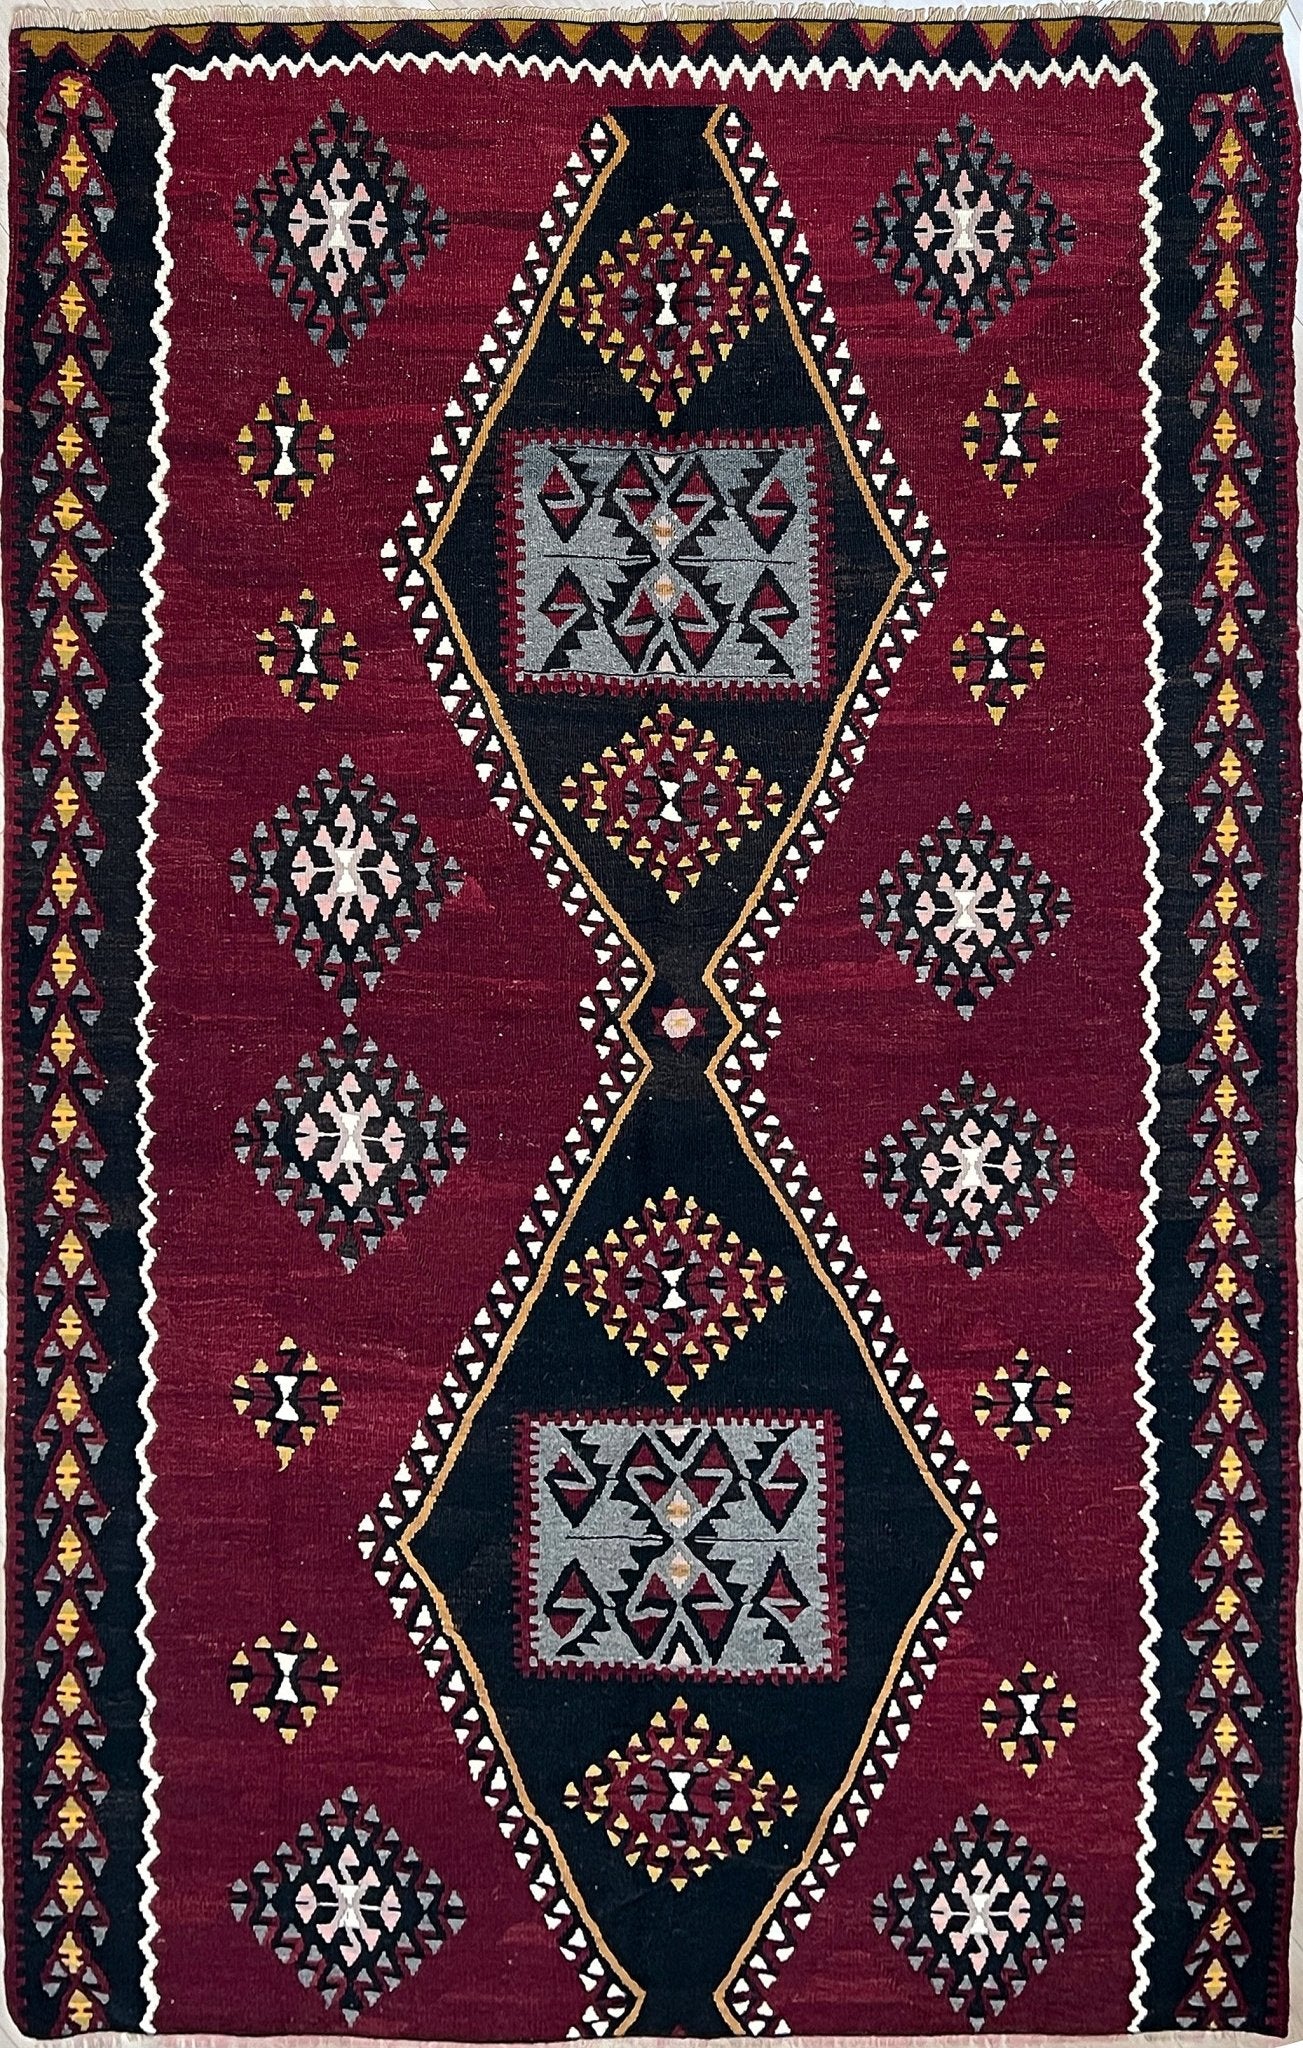 kayseri vintage turkish rug shop Sf Bay Area. Buy handmade wool flatweave rug. Vibrant color warm color rug in living room setting. 